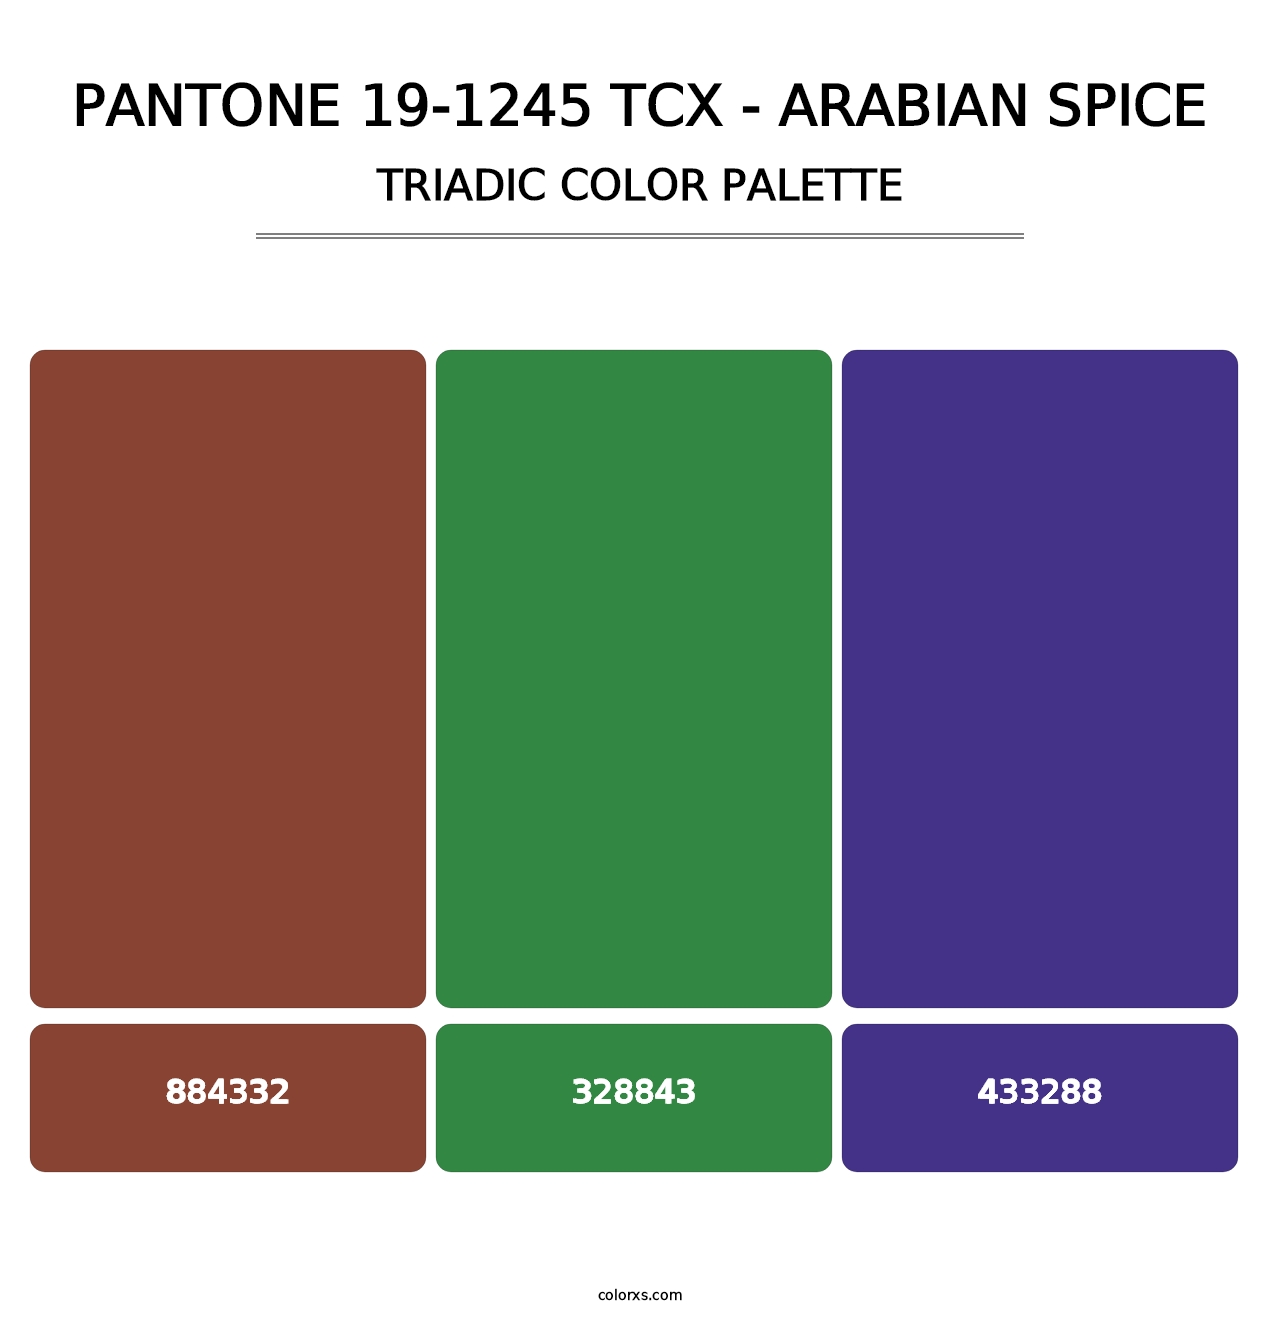 PANTONE 19-1245 TCX - Arabian Spice - Triadic Color Palette